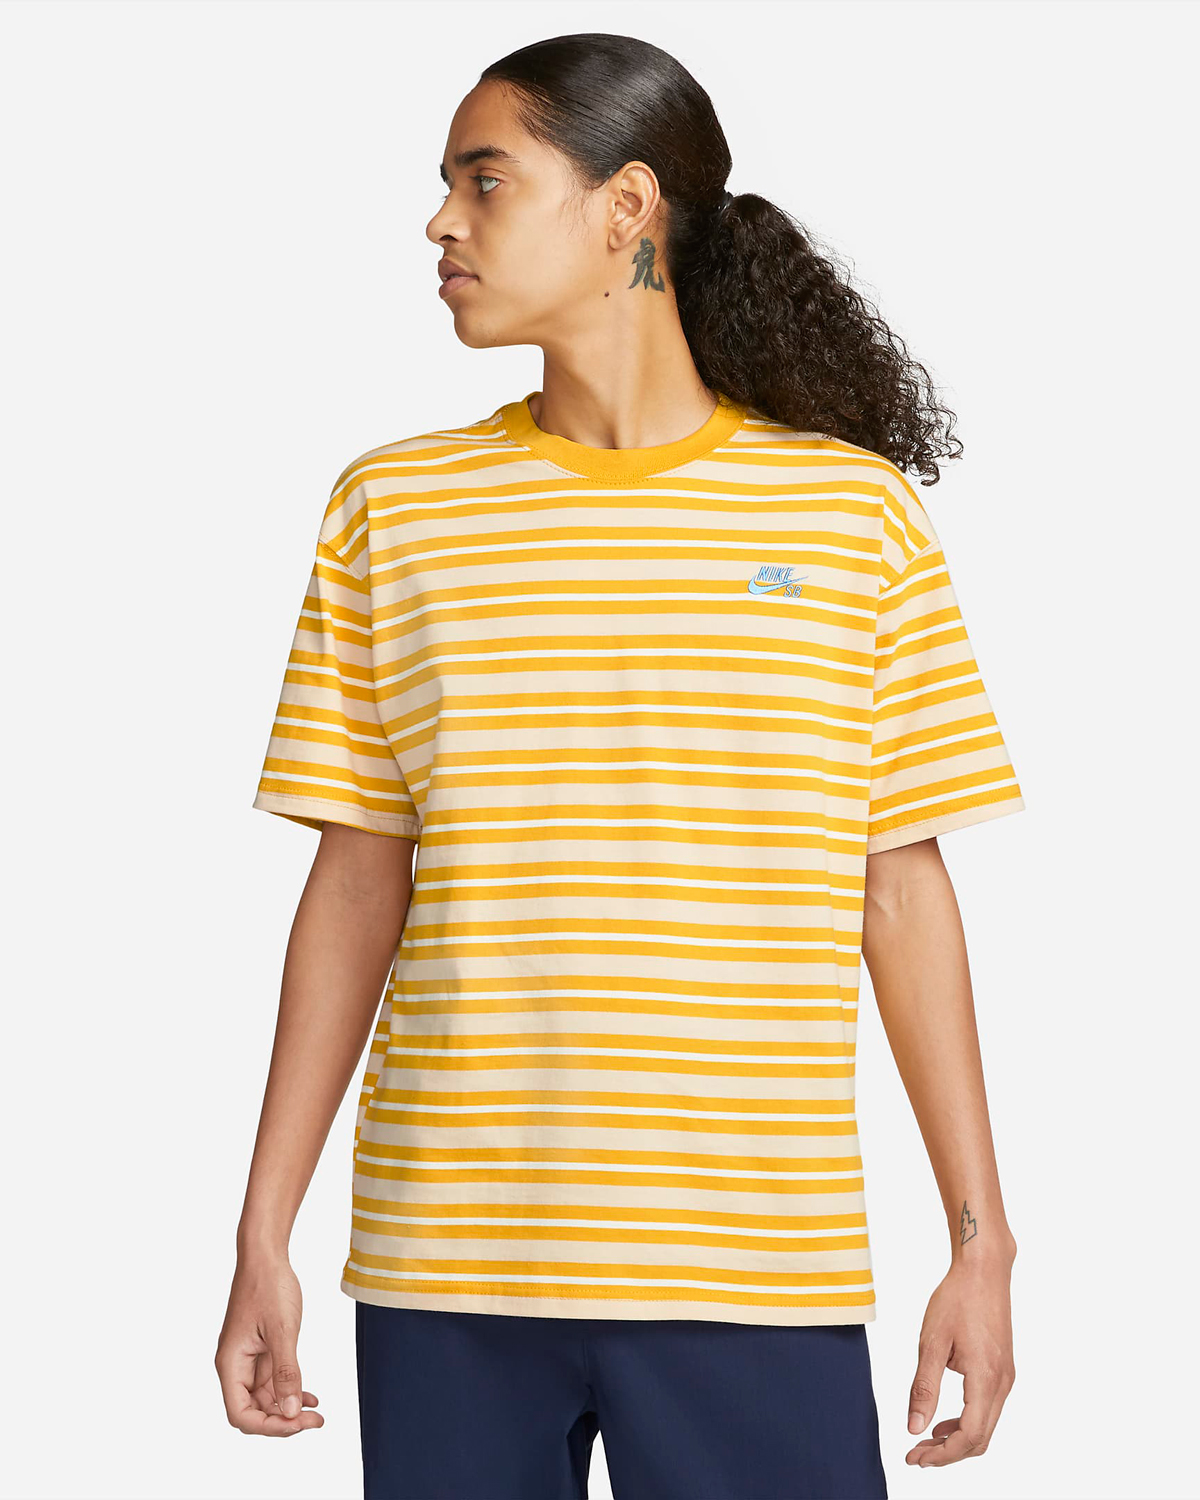 Nike-SB-Striped-T-Shirt-Dark-Sulfur